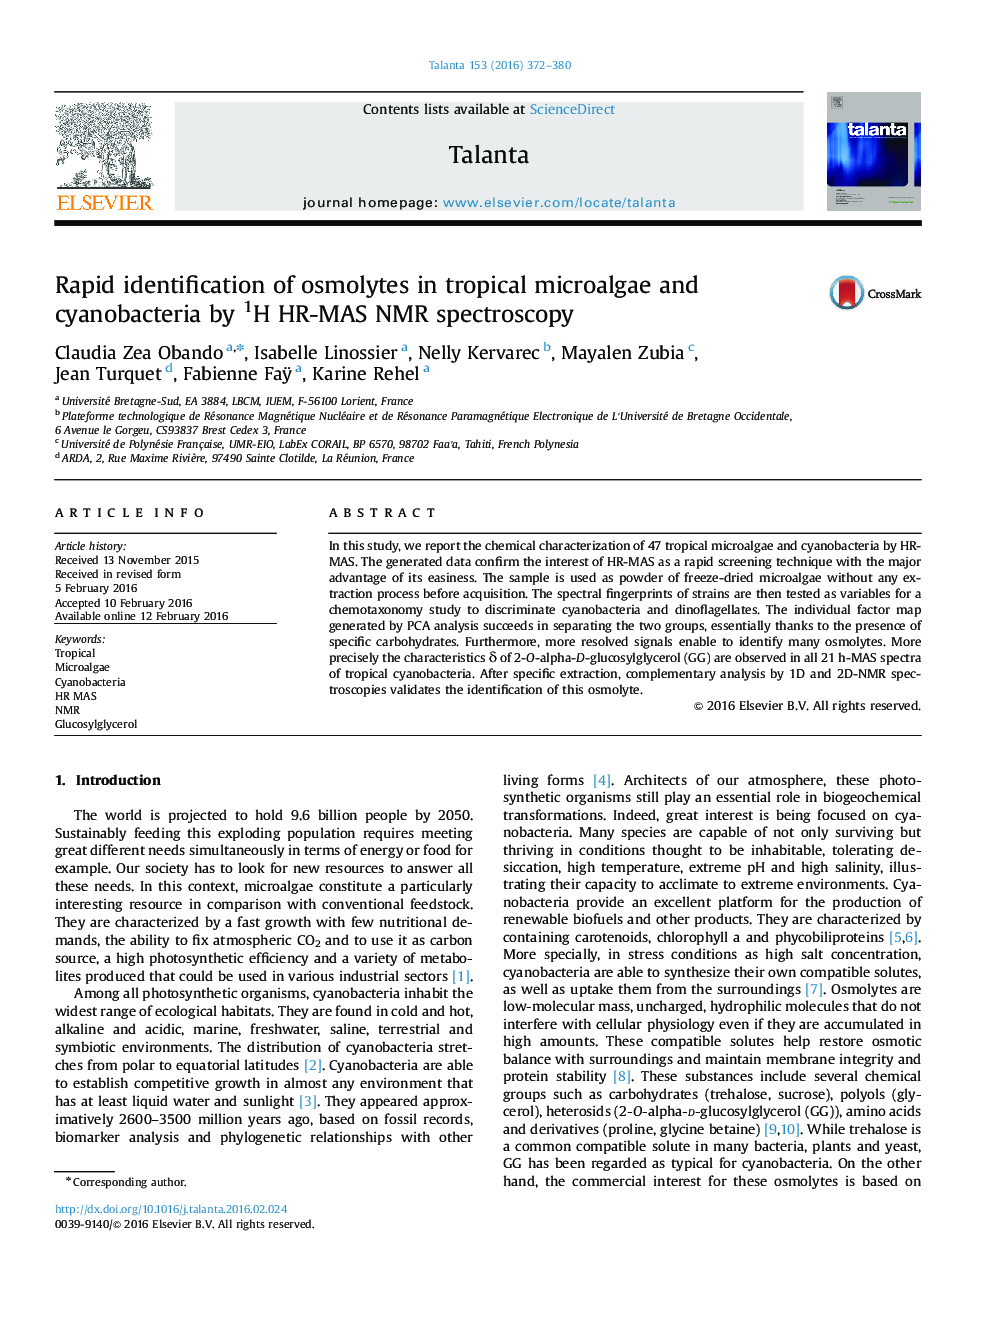 Rapid identification of osmolytes in tropical microalgae and cyanobacteria by 1H HR-MAS NMR spectroscopy